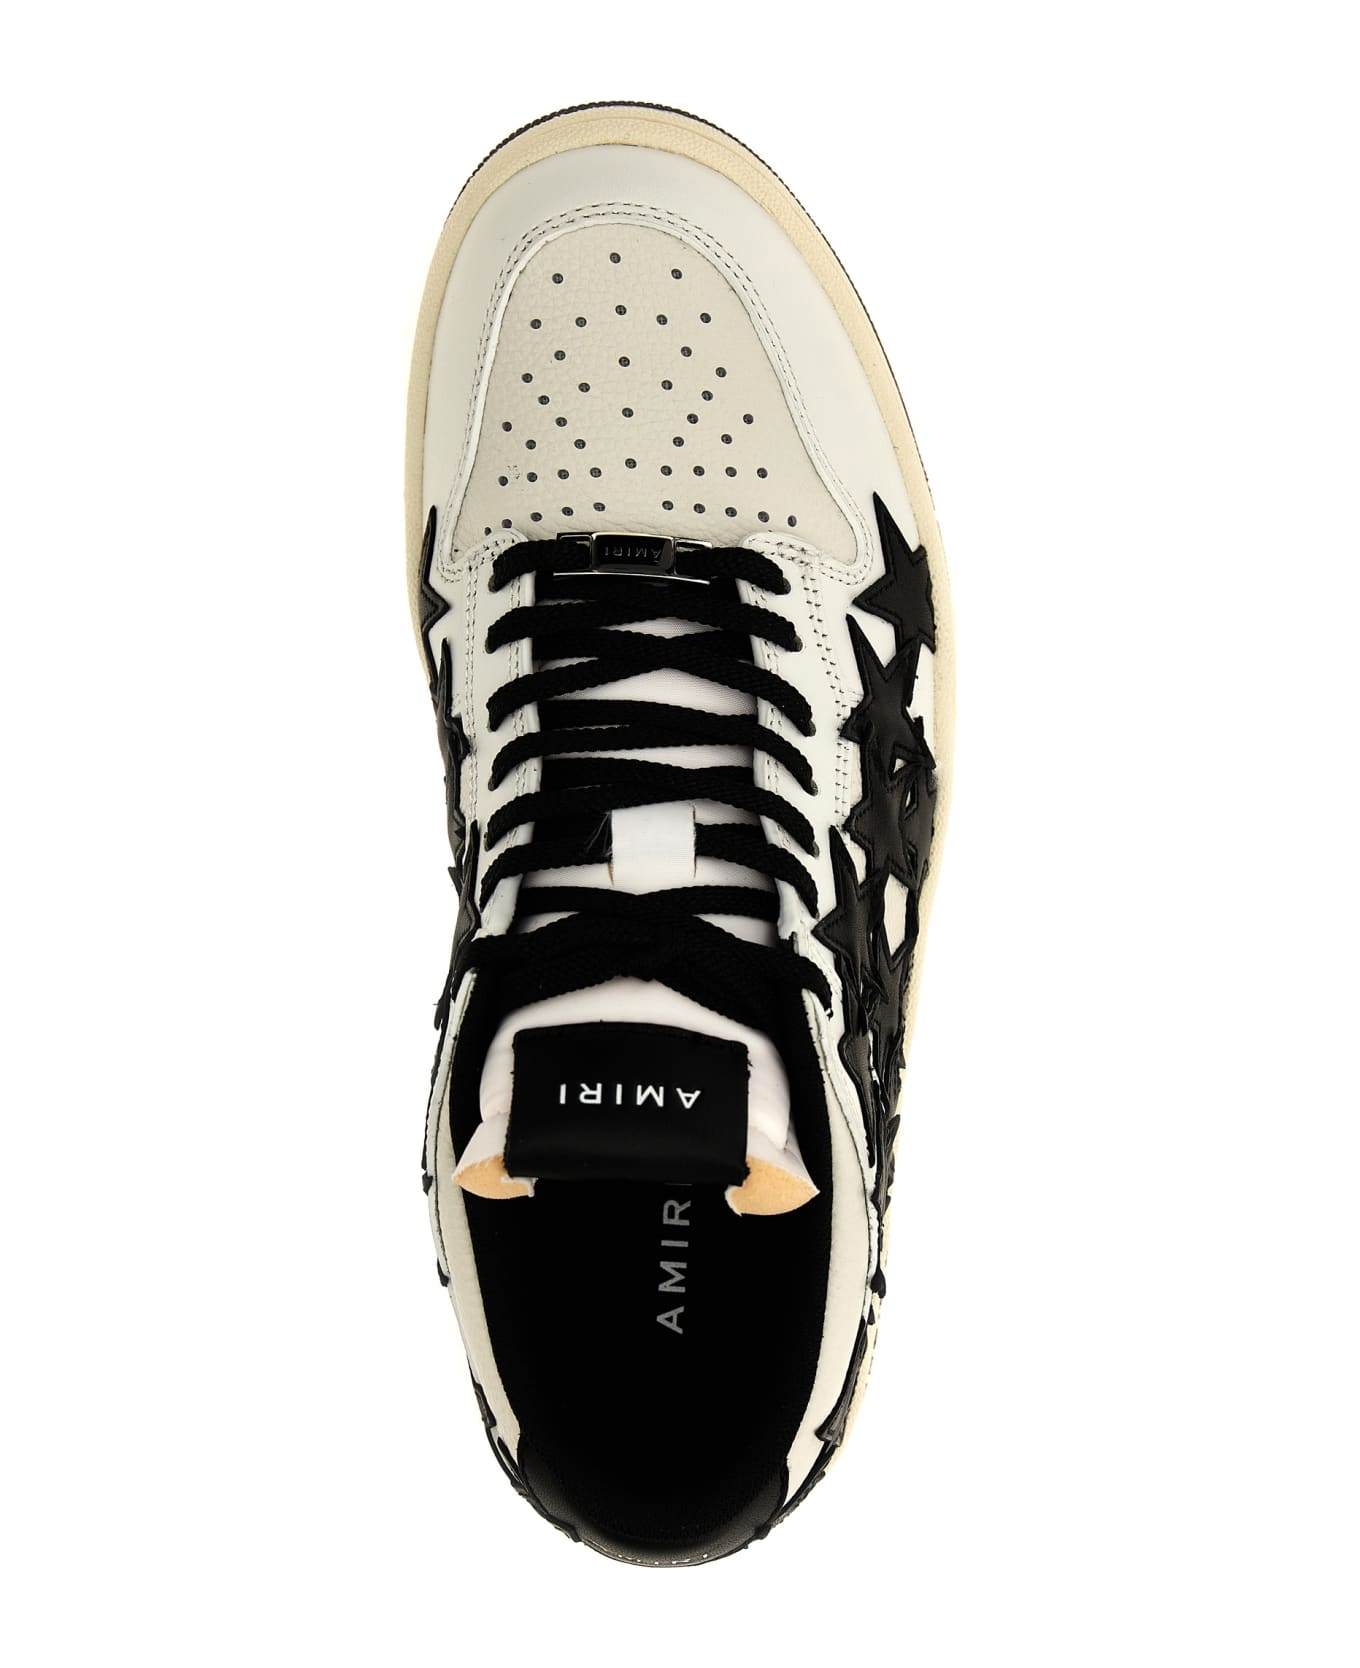 AMIRI 'stars Low' Sneakers - White/Black